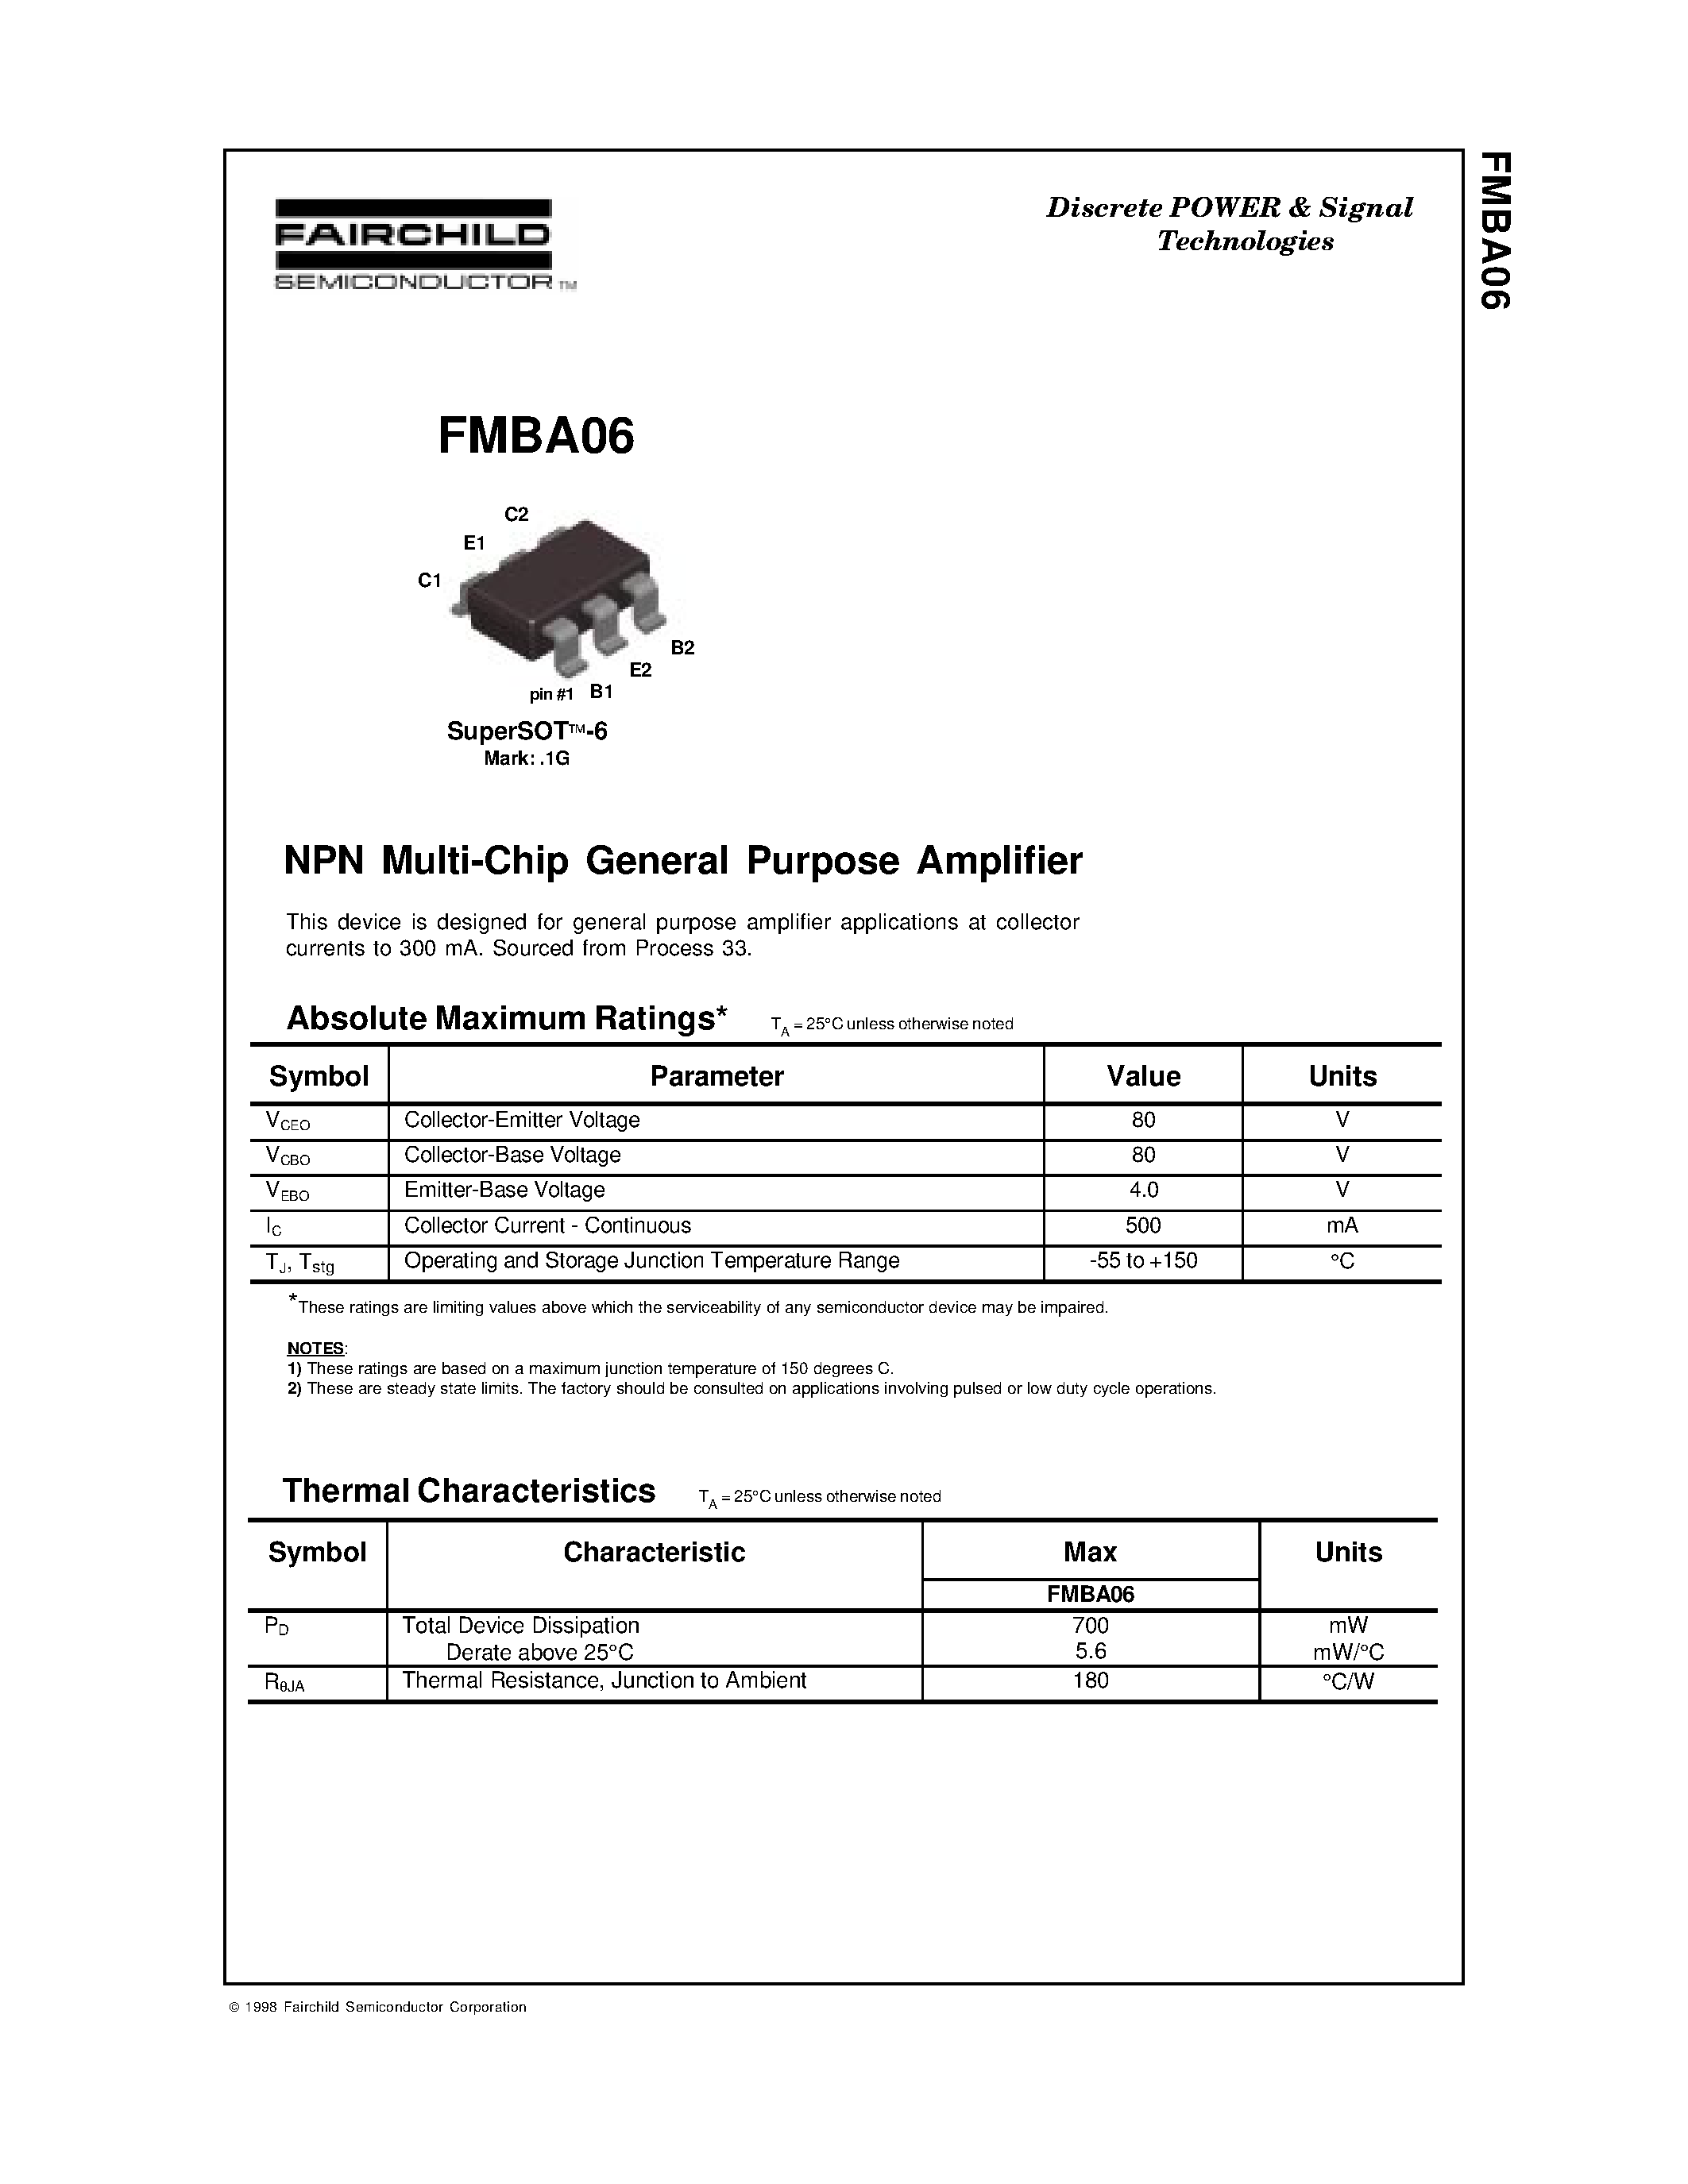 Datasheet FMBA06 - NPN Multi-Chip General Purpose Amplifier page 1